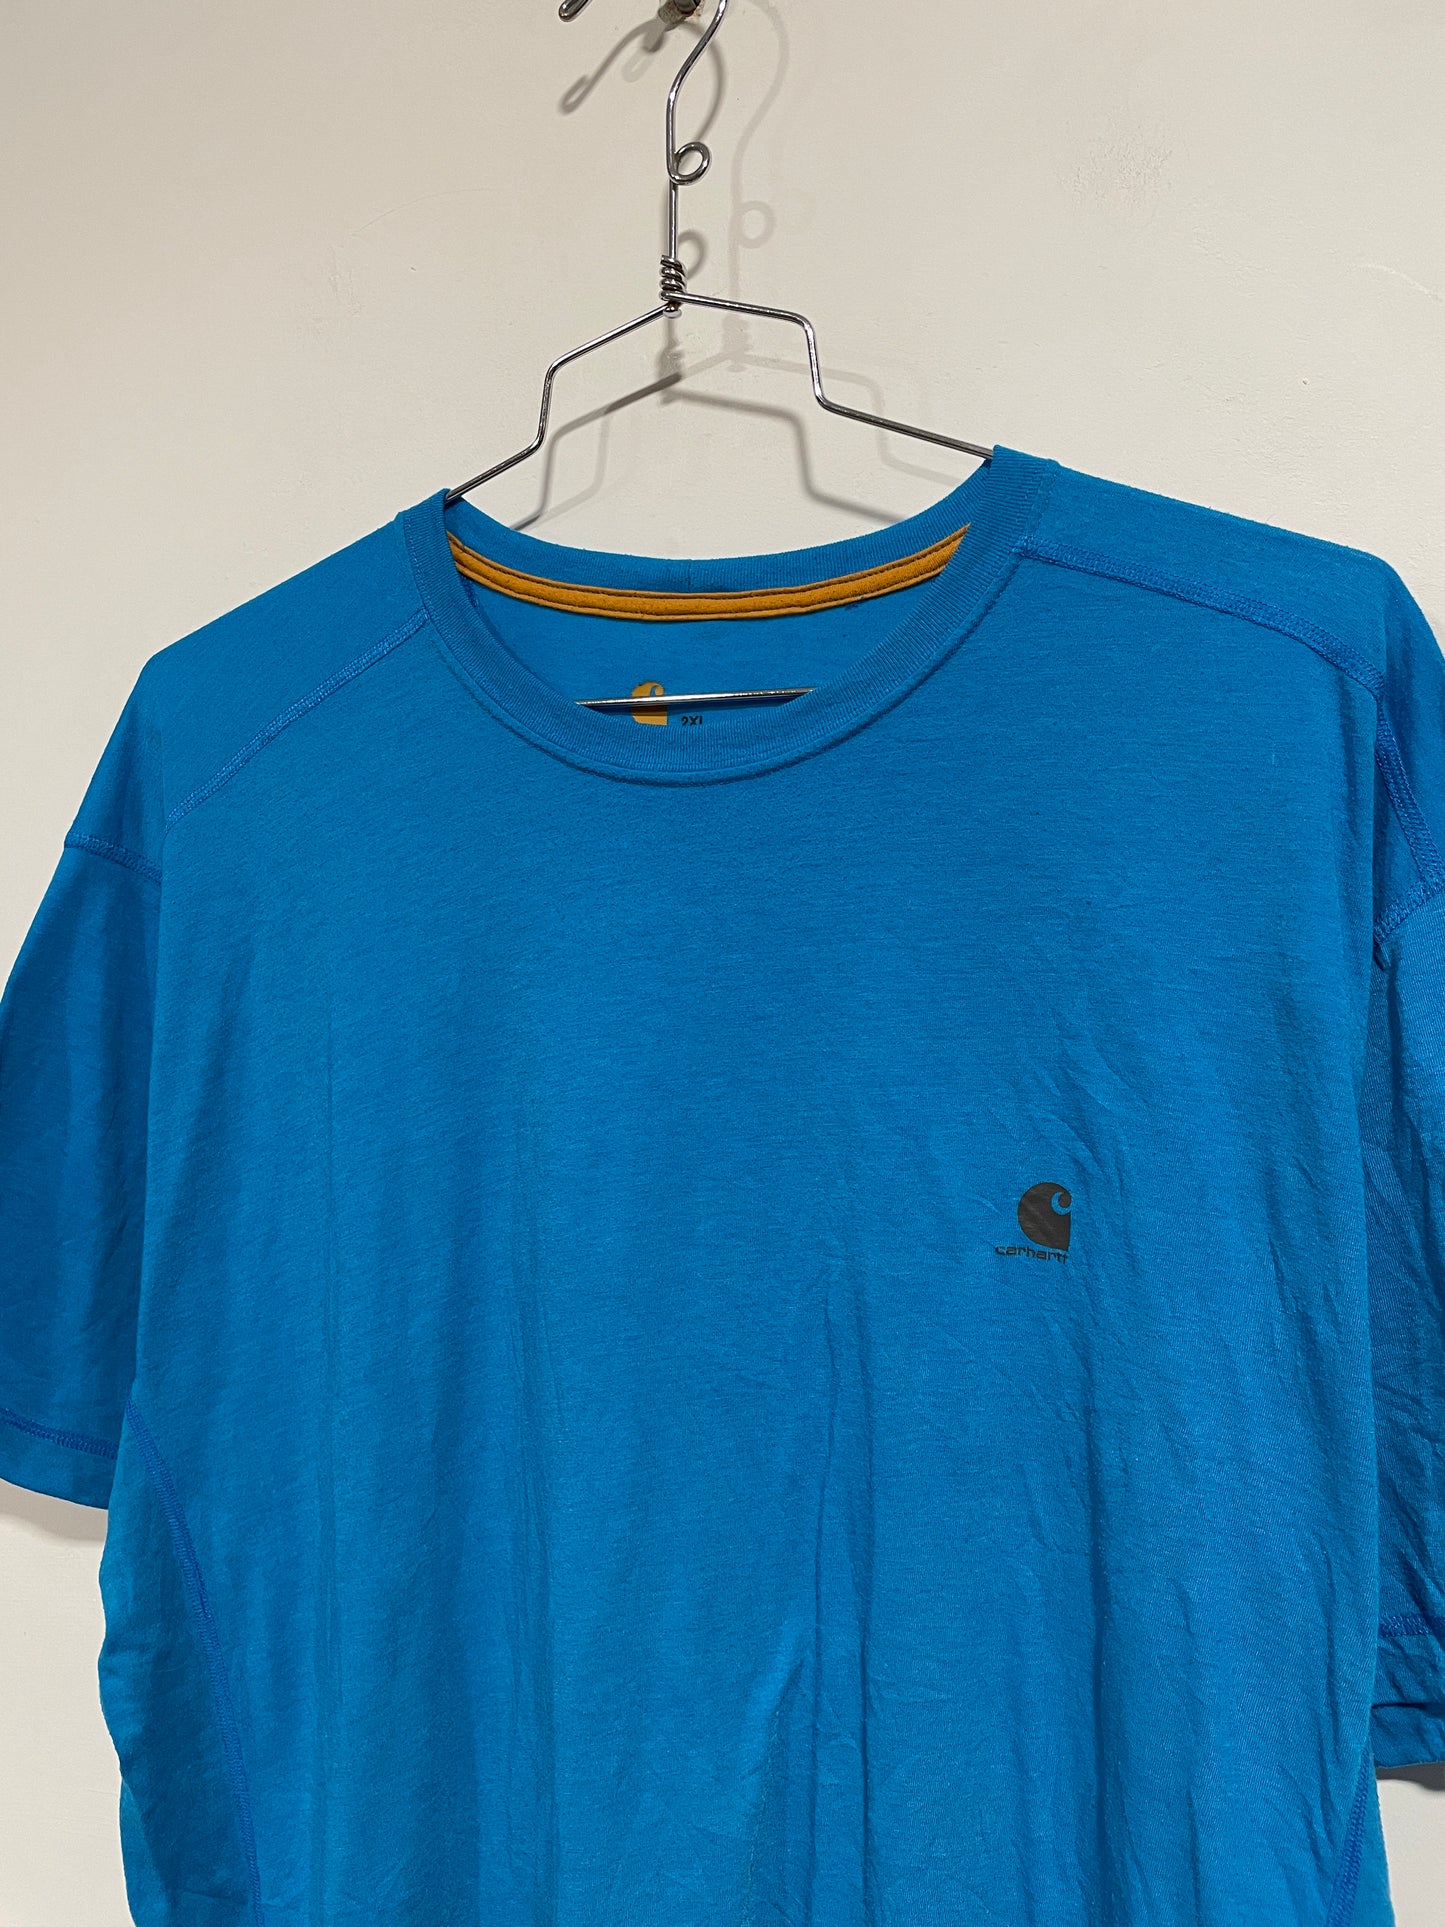 T shirt Carhartt workwear (MR058)